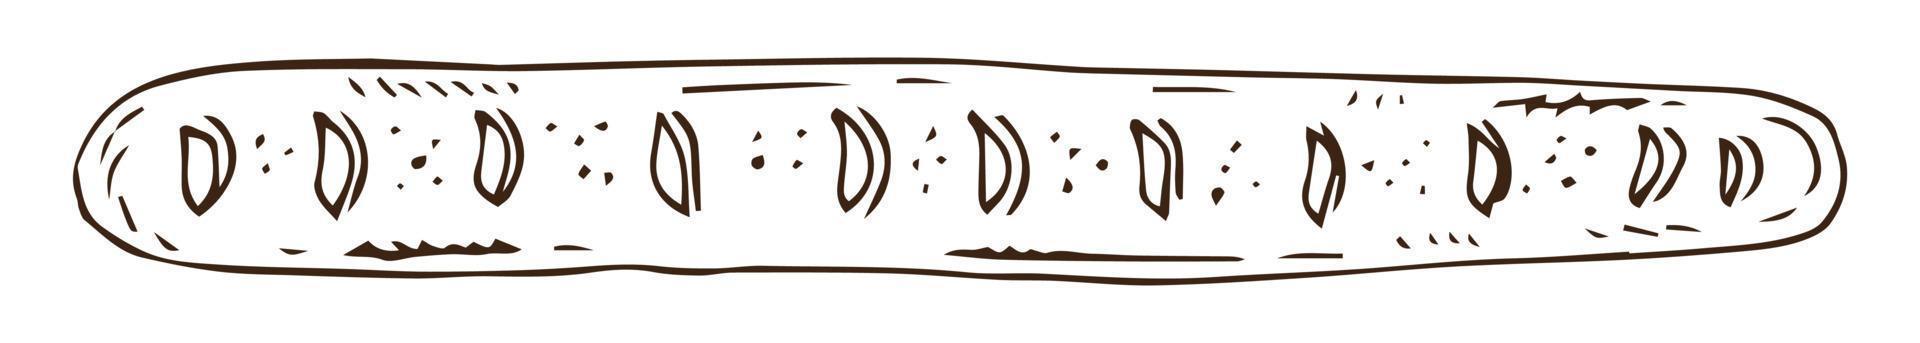 icono de tostadas de sándwich de baguette de pan, ilustración vectorial de un trozo de pan estilo garabato vector